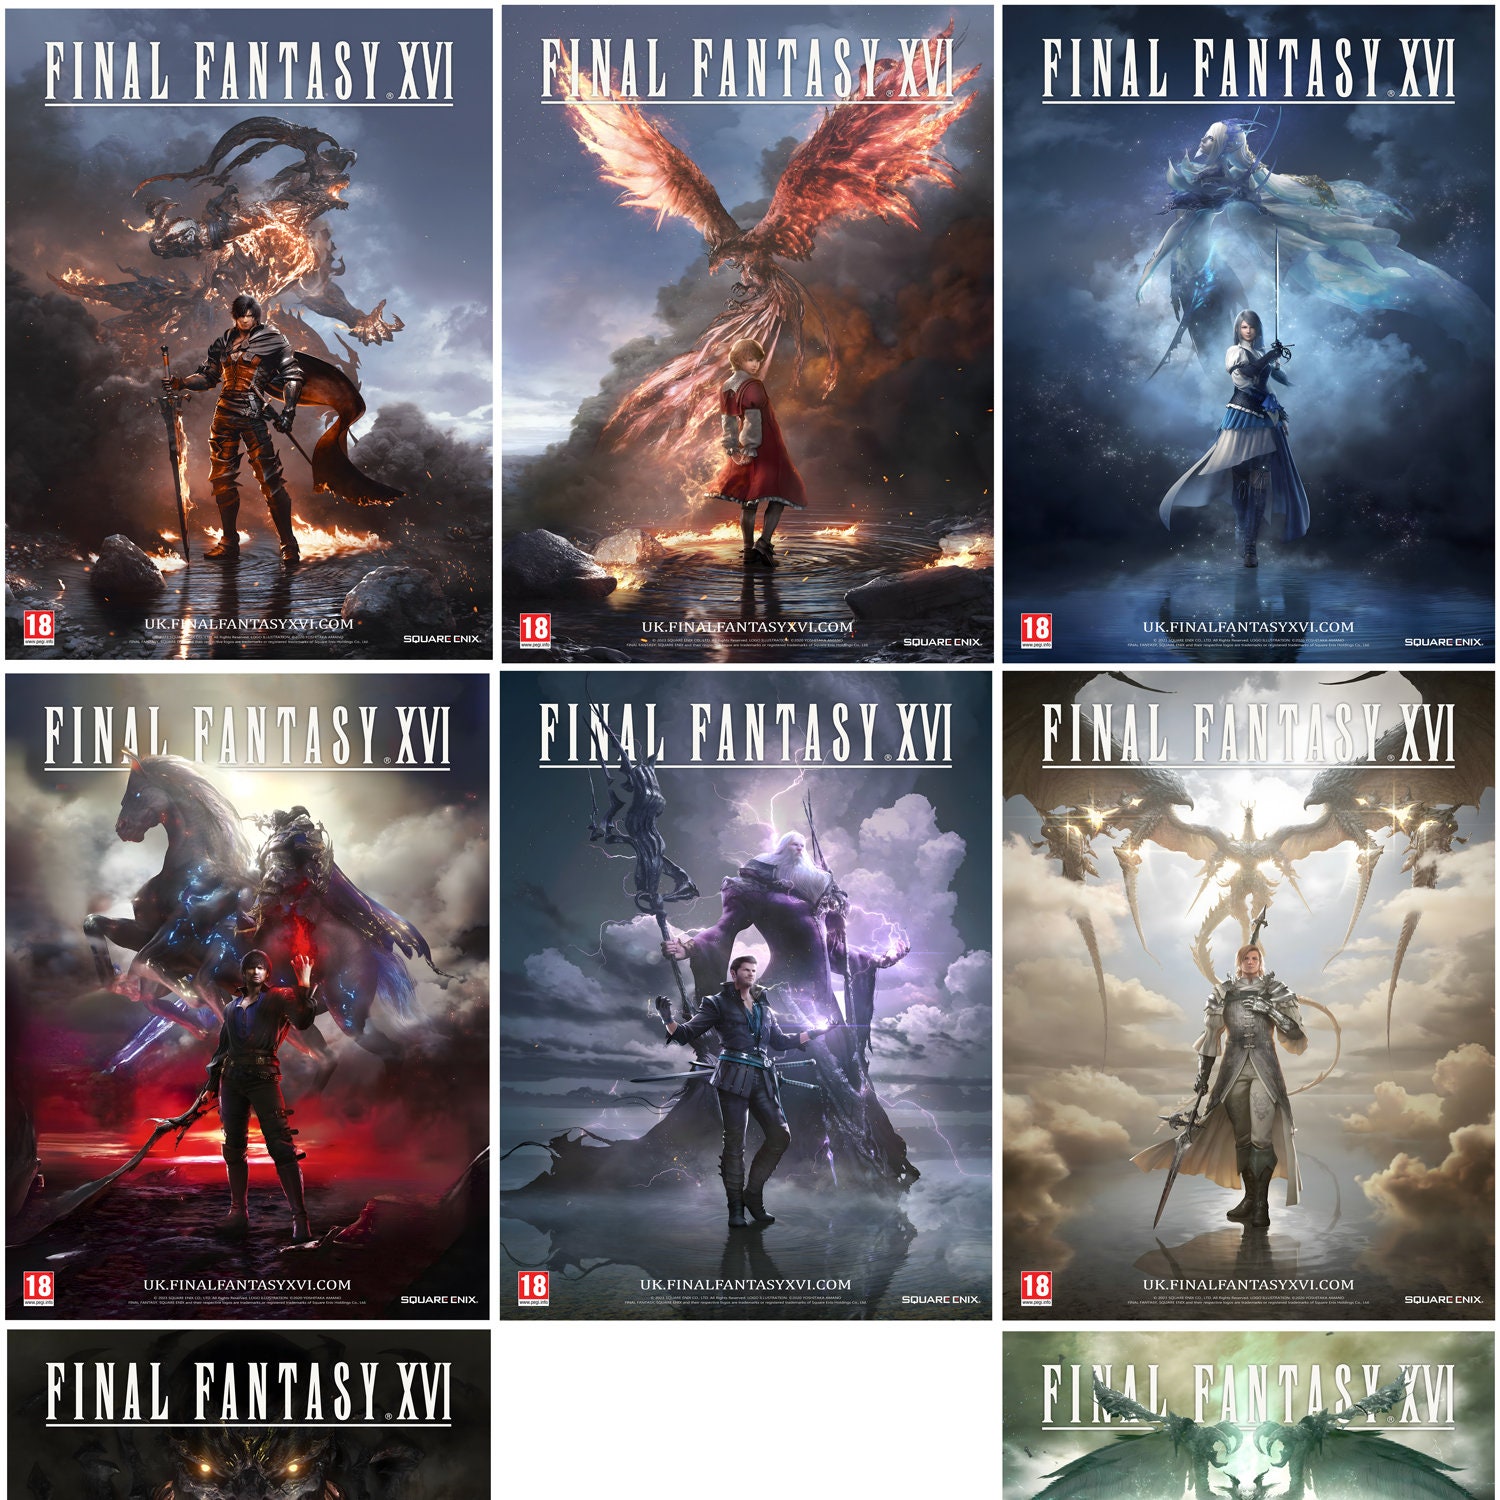 Does Final Fantasy 16 Have Multiple Endings? - IMDb